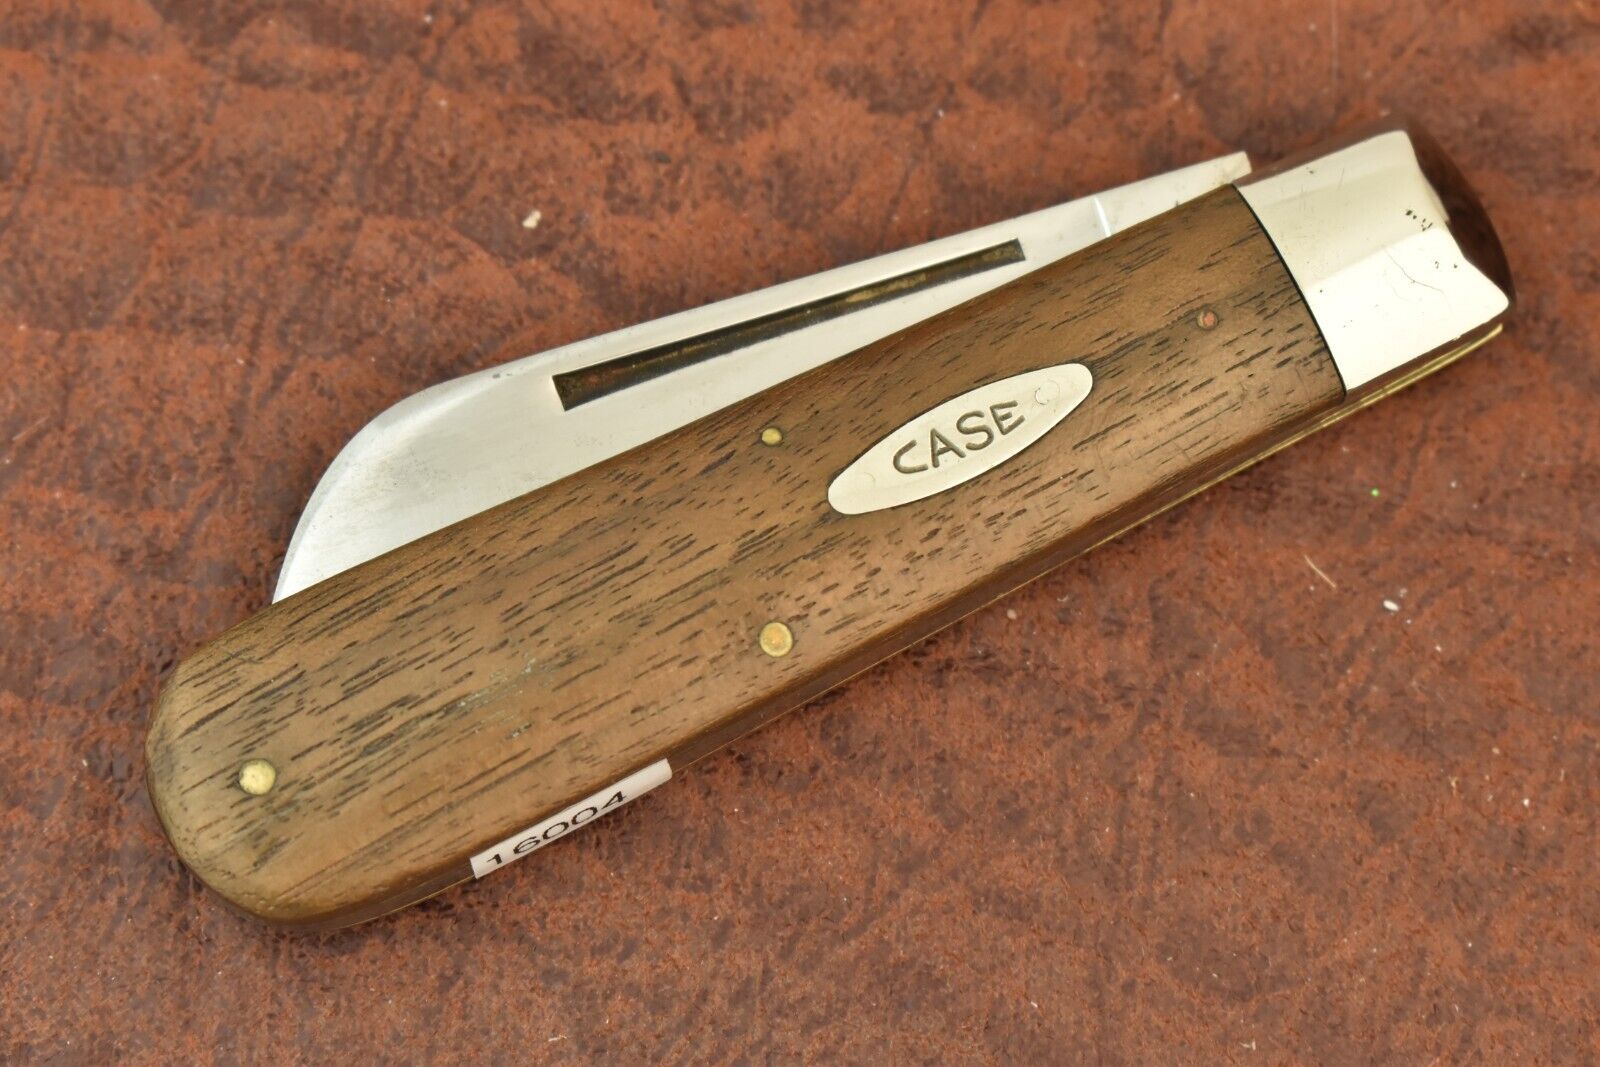 CASE XX USA 4 DOT 1976 SMOOTH WOOD BIG WHALER STYLE JACK KNIFE 11031 SH (16004)